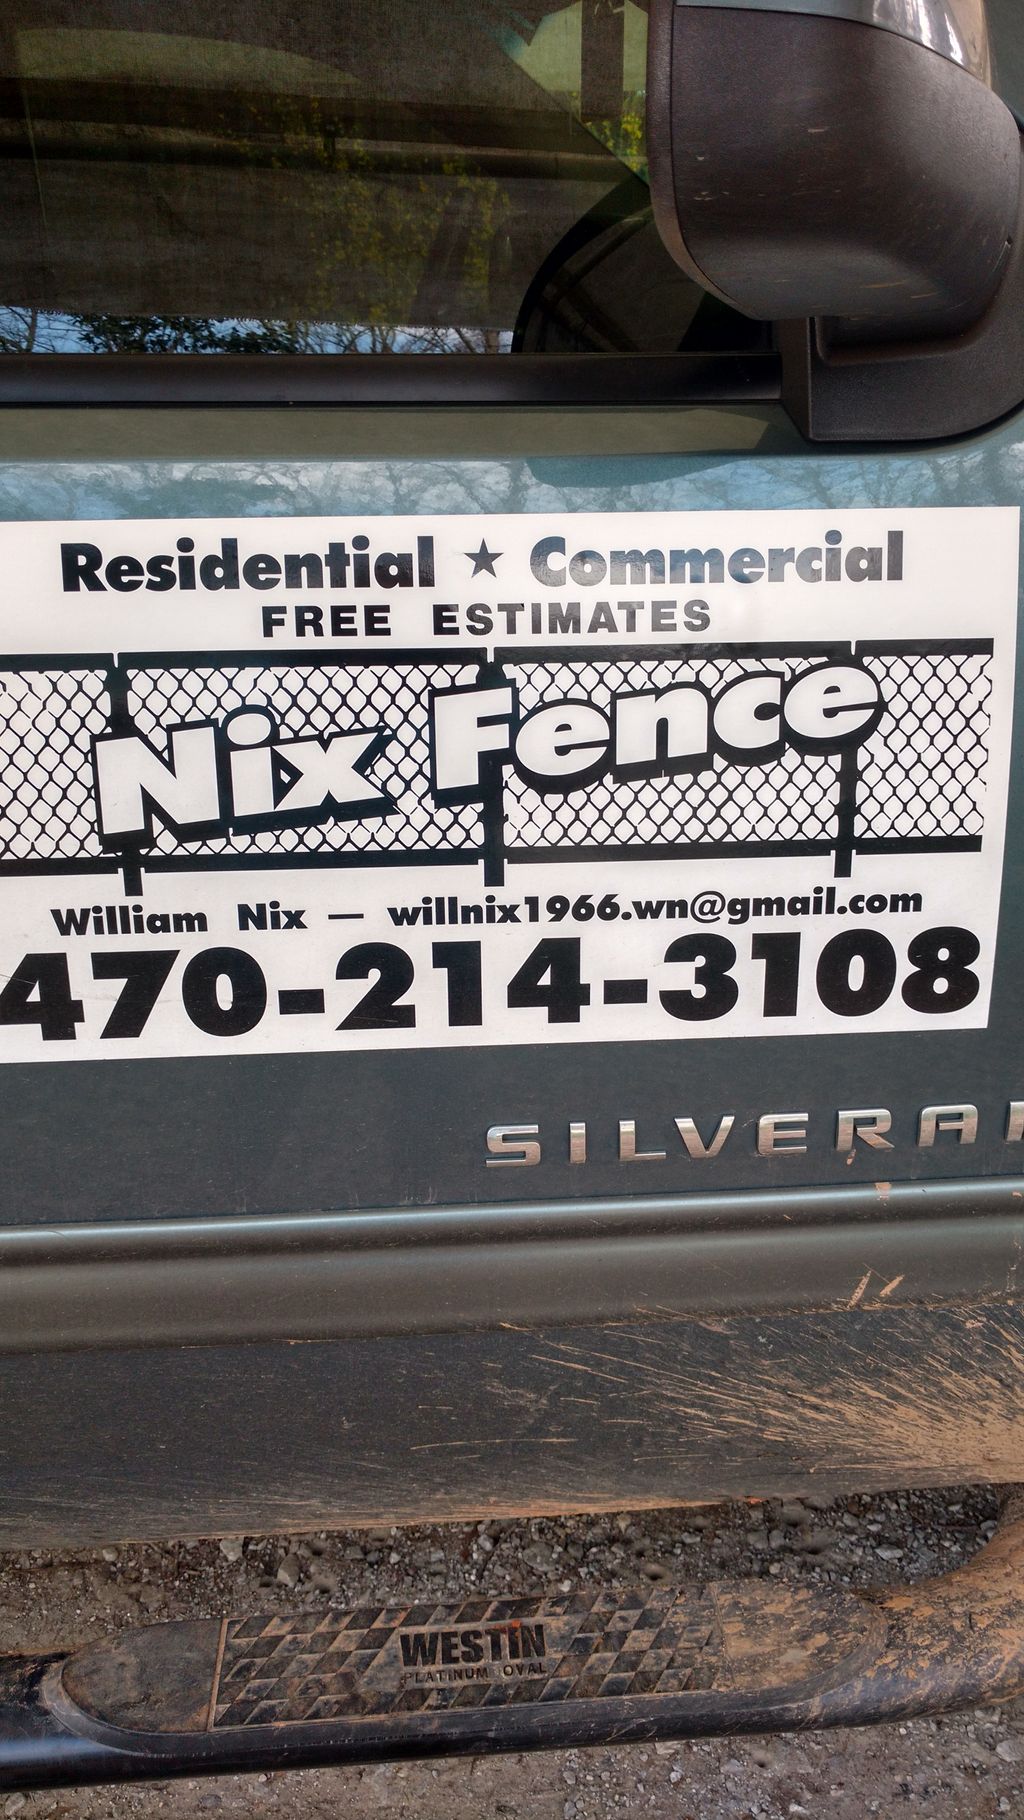 Nix Fence Company